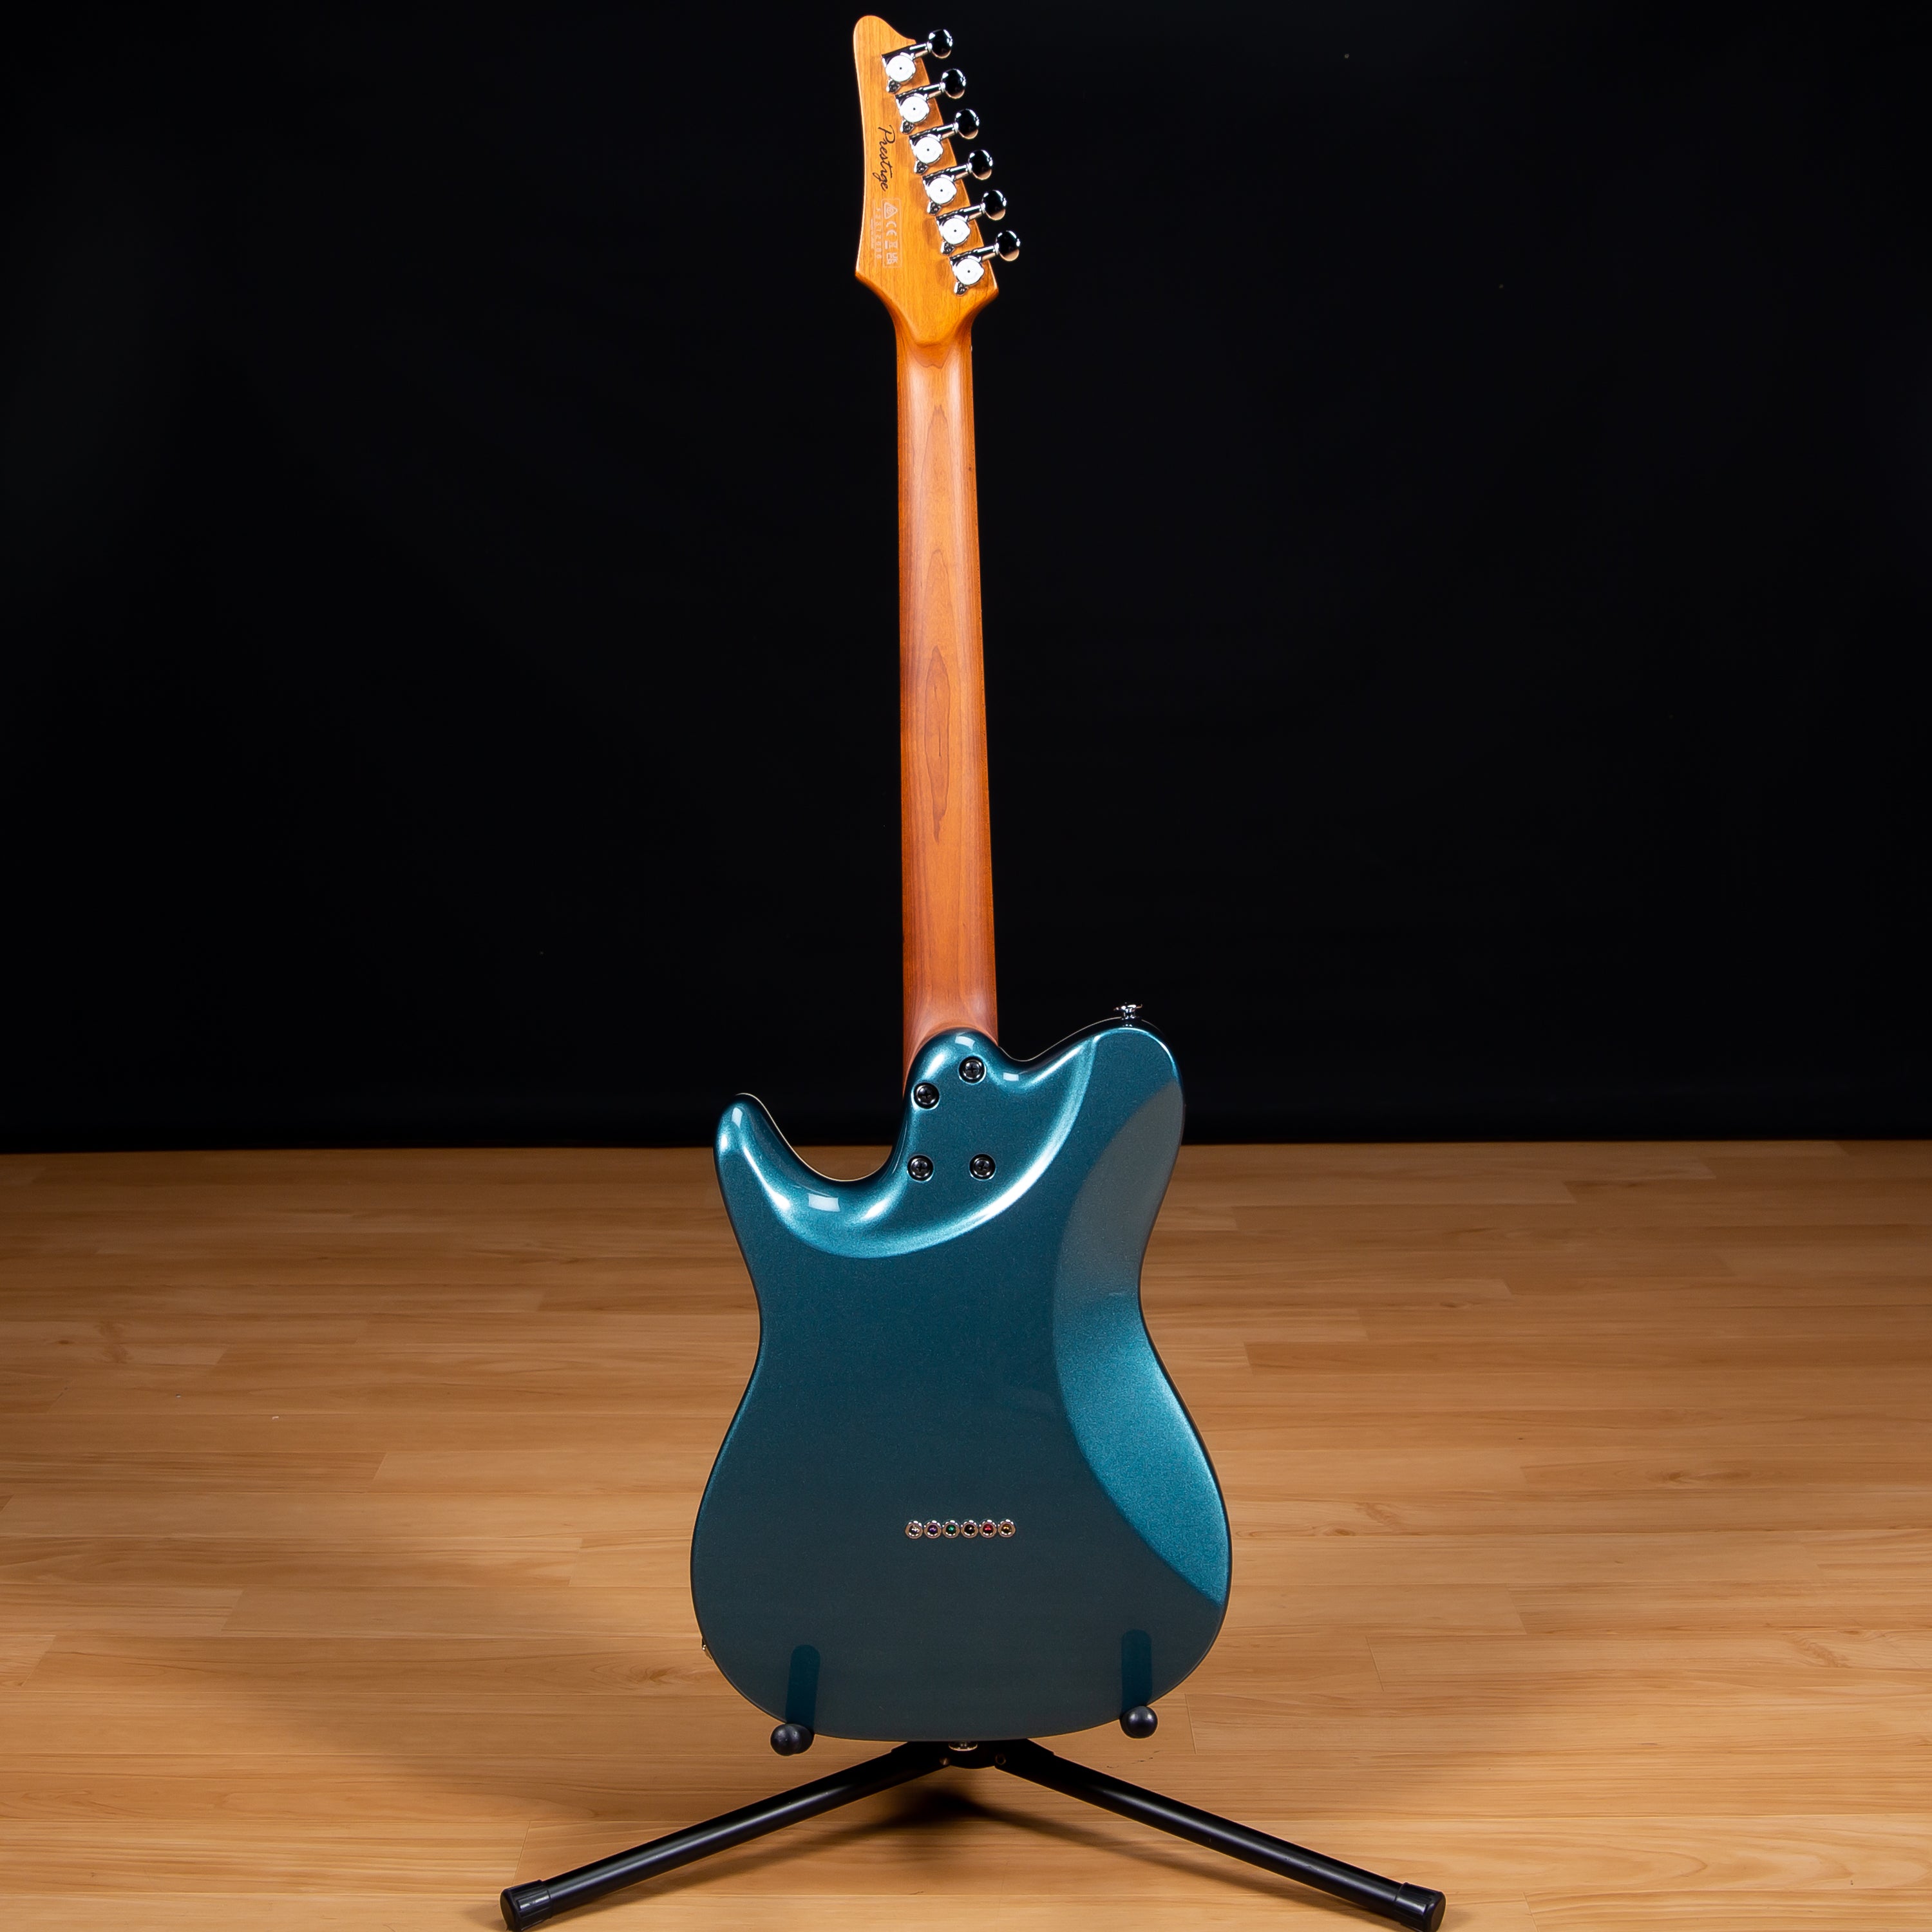 Ibanez Prestige AZS2209 Electric Guitar - Antique Turquoise view 10